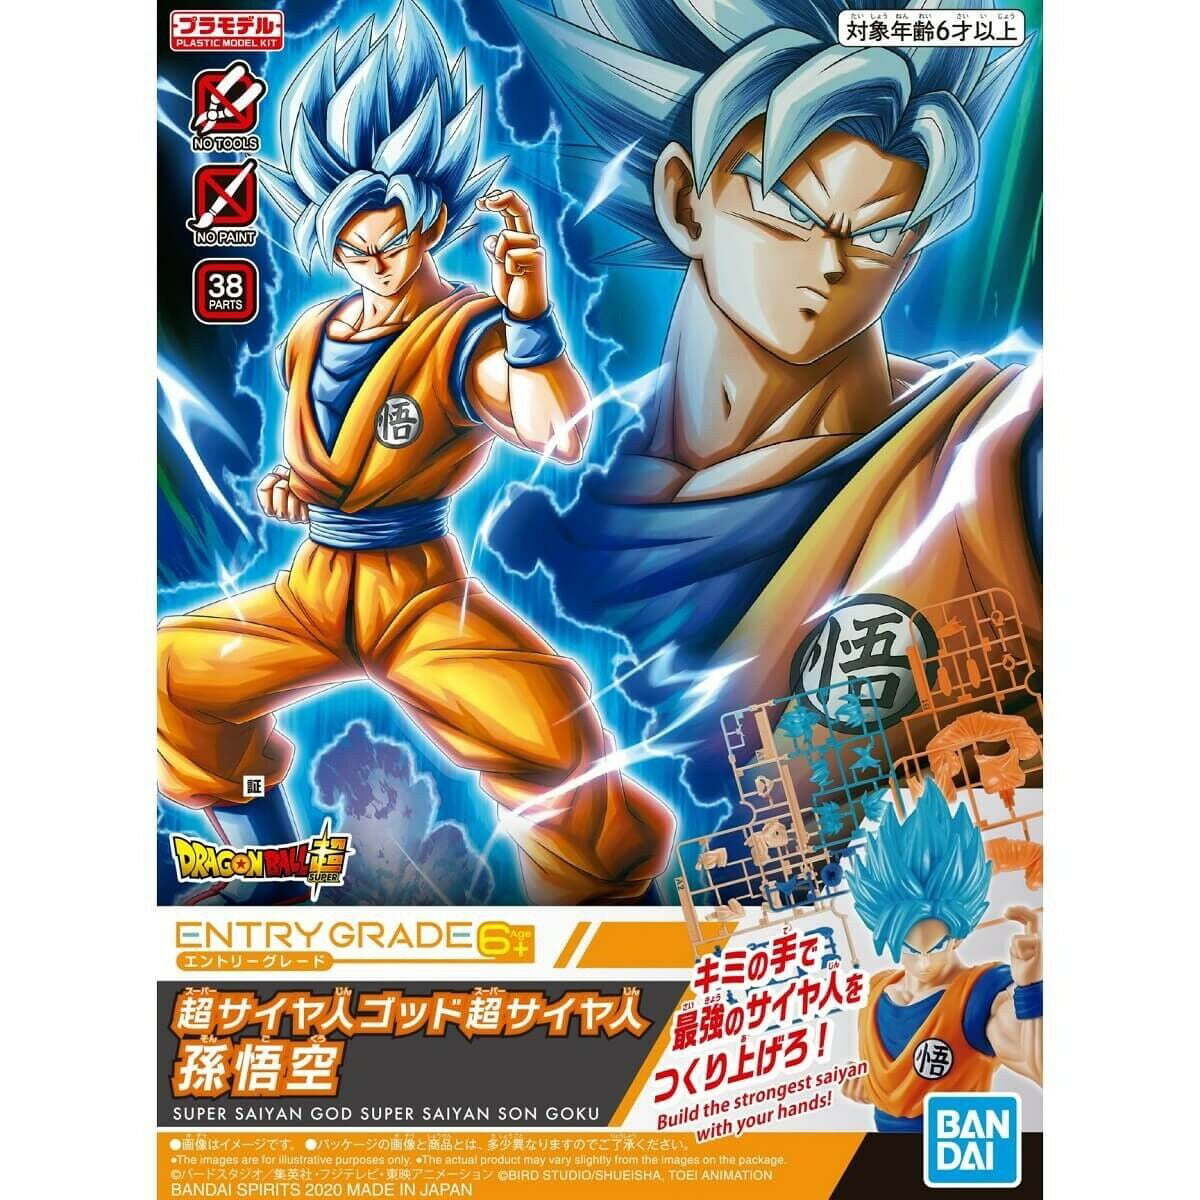 Bandai Entry Grade Dragon Ball Super #2 SSGSS Son Goku Plastic Model Kit 5058859 for sale online 